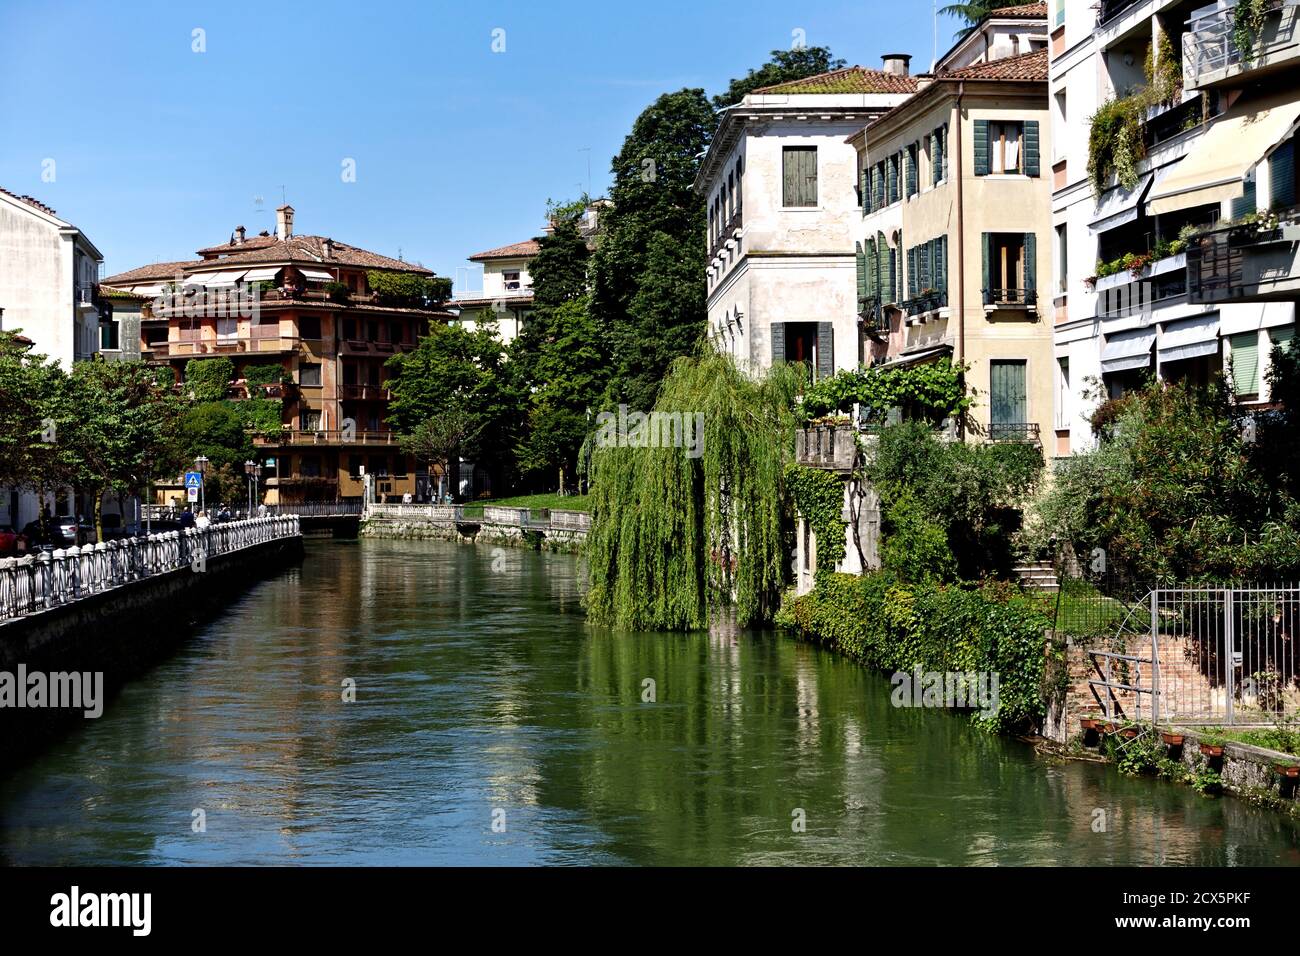 Blick auf die typisch venezianischen Gebäude entlang der Fluss Sile, Riviera Santa Margherita. Weeping Willow Tree. Treviso, Venetien, Italien, Europa. Kopieren Sie Platz. Stockfoto